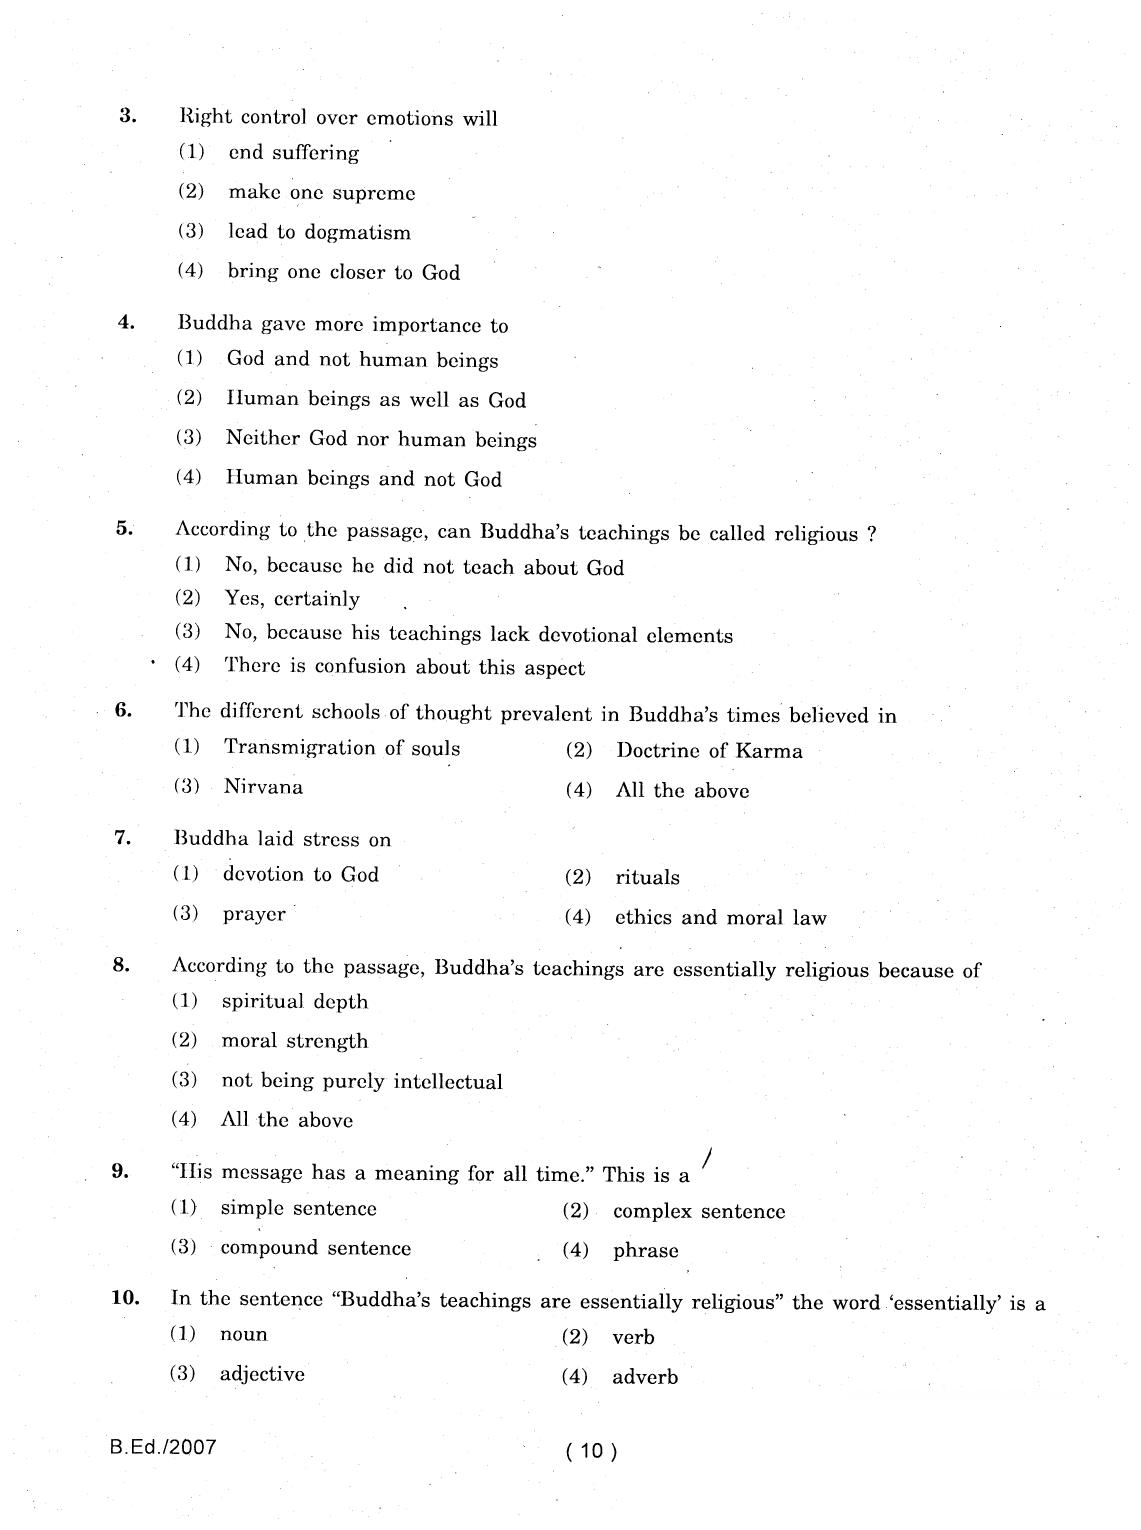 IGNOU B.Ed 2007 Question Paper - Page 10